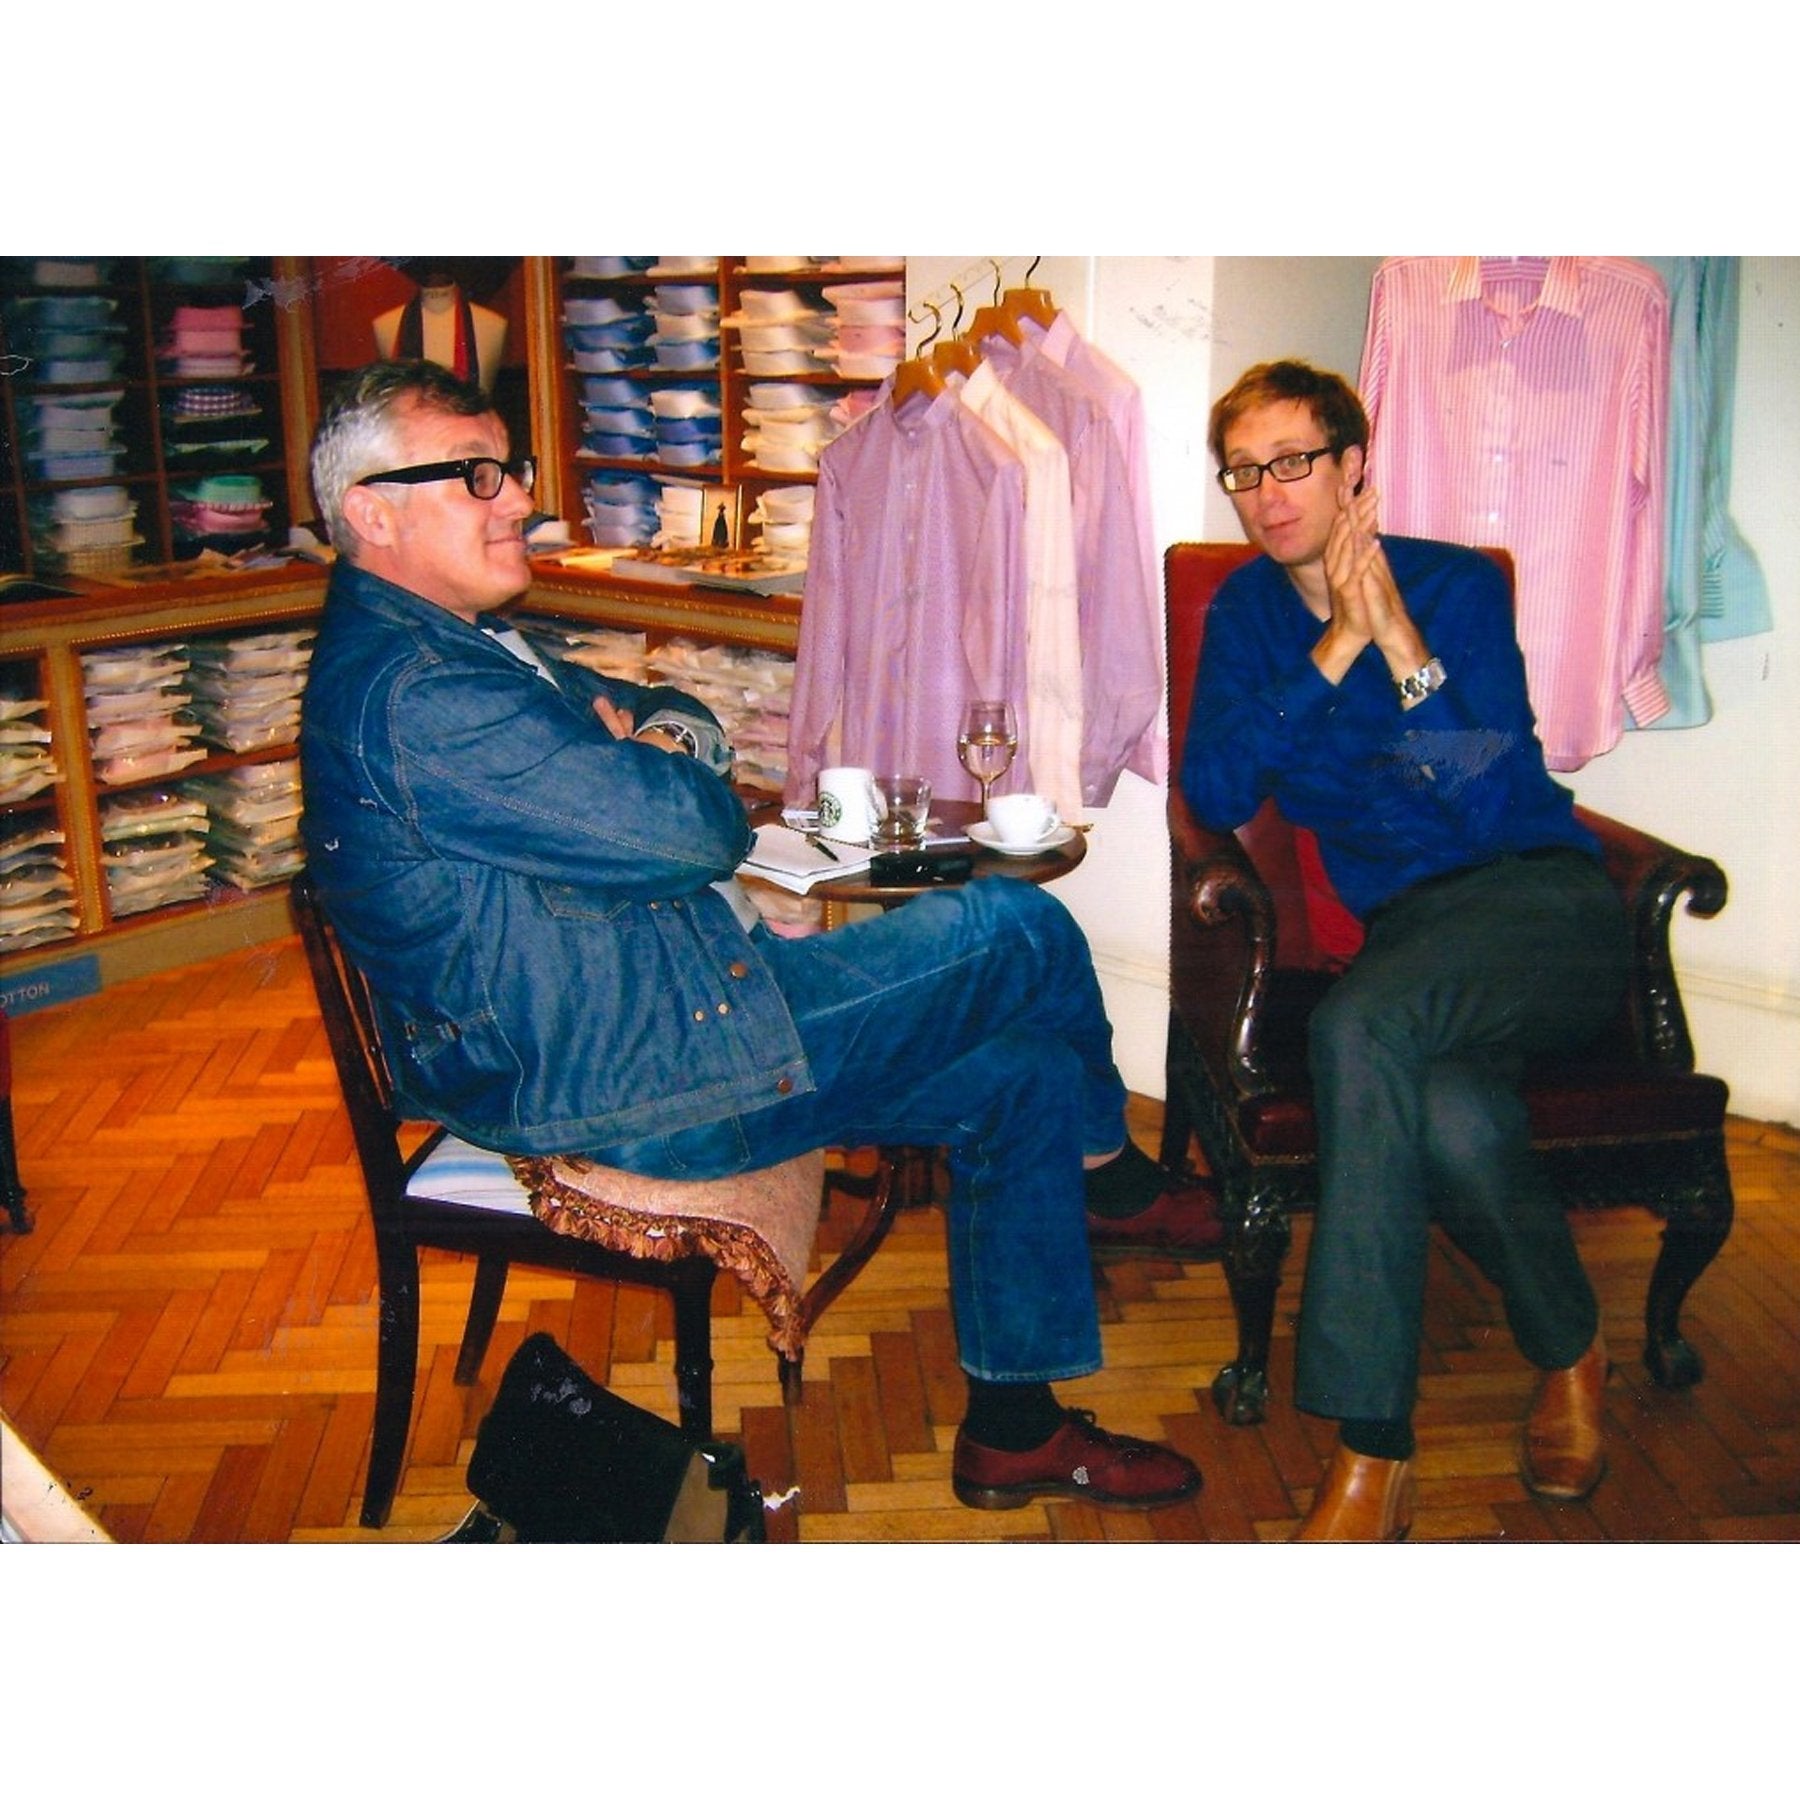 Chris Sullivan interviewing Stephen Merchant in Emma Willis’ Jermyn Street shop. - Emma Willis